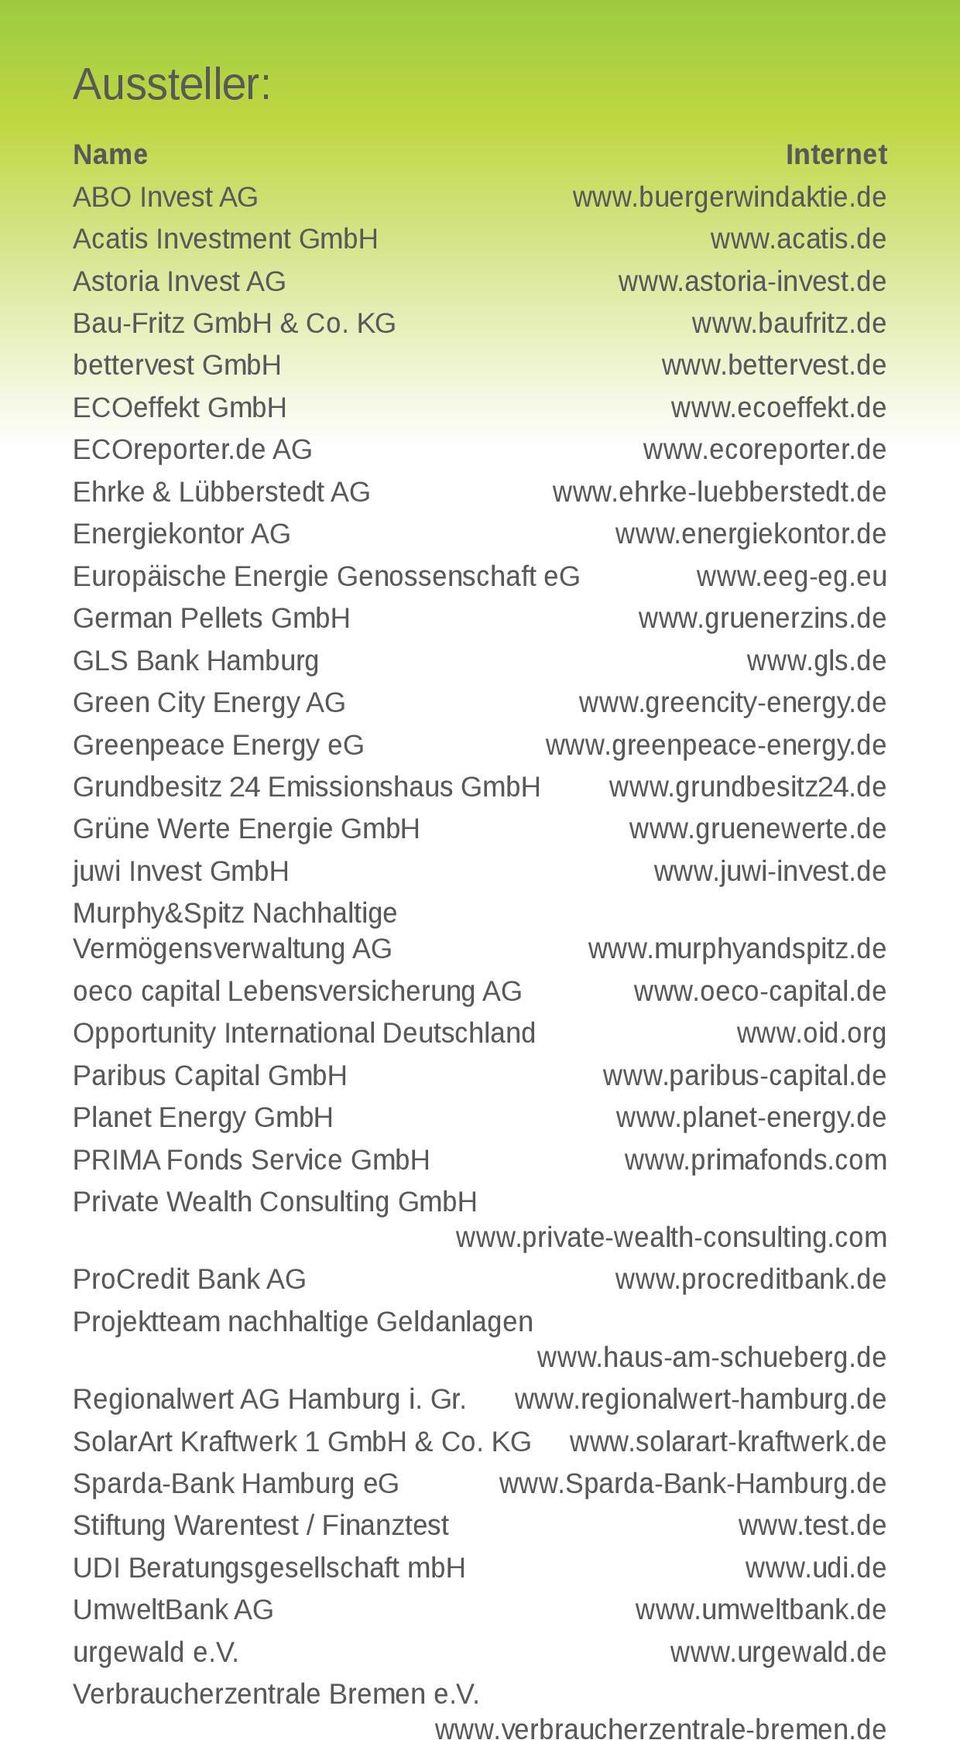 de Europäische Energie Genossenschaft eg www.eeg-eg.eu German Pellets GmbH www.gruenerzins.de GLS Bank Hamburg www.gls.de Green City Energy AG www.greencity-energy.de Greenpeace Energy eg www.